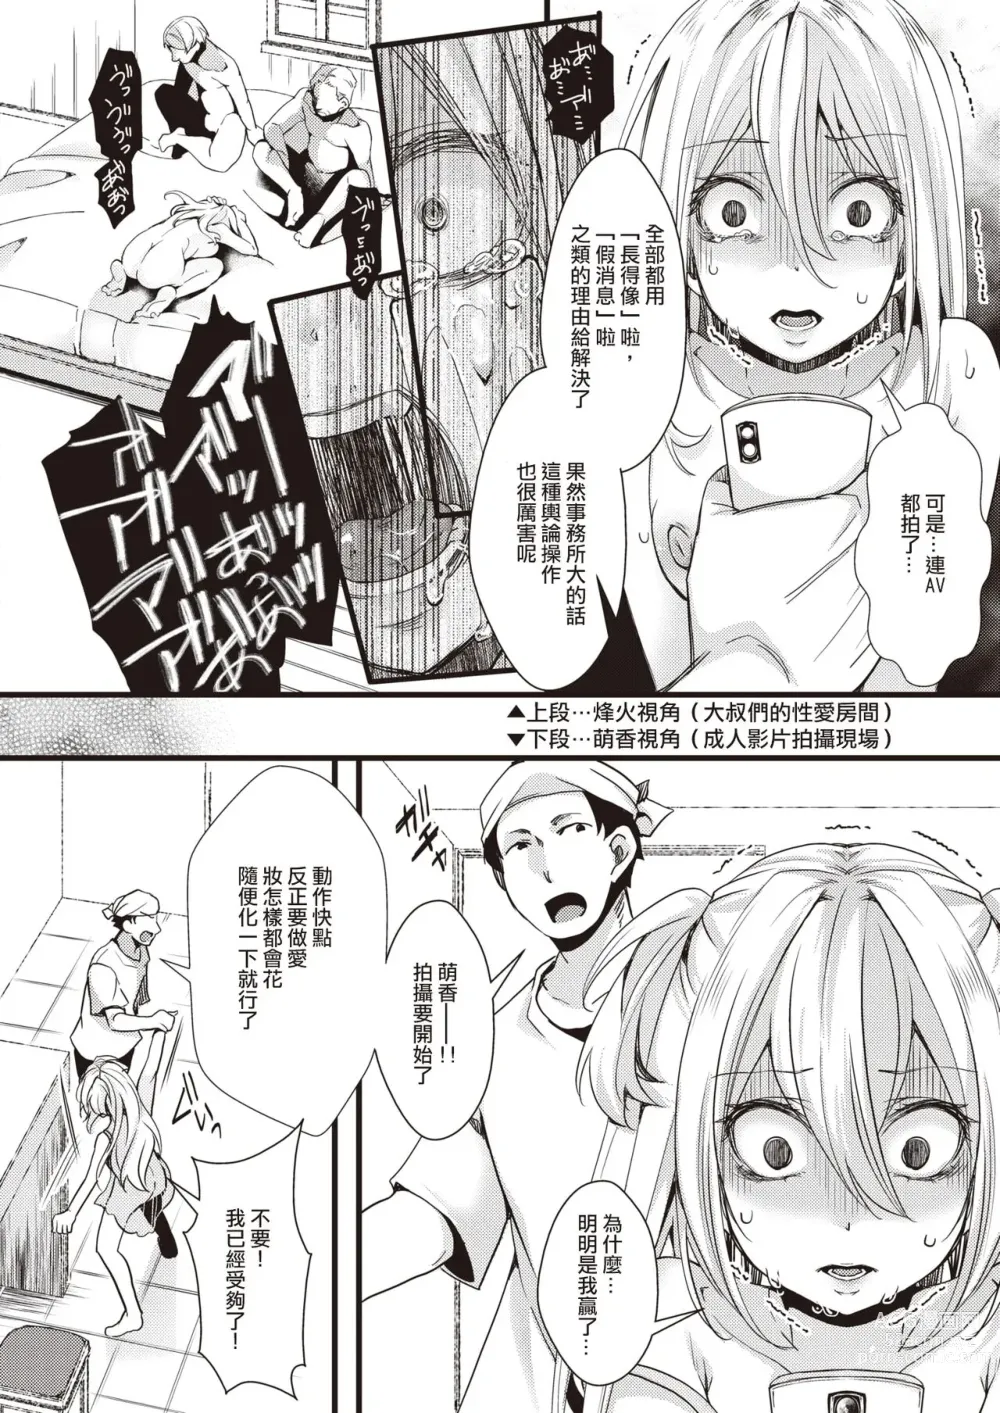 Page 3 of manga Sutesen Porno - wasting porno